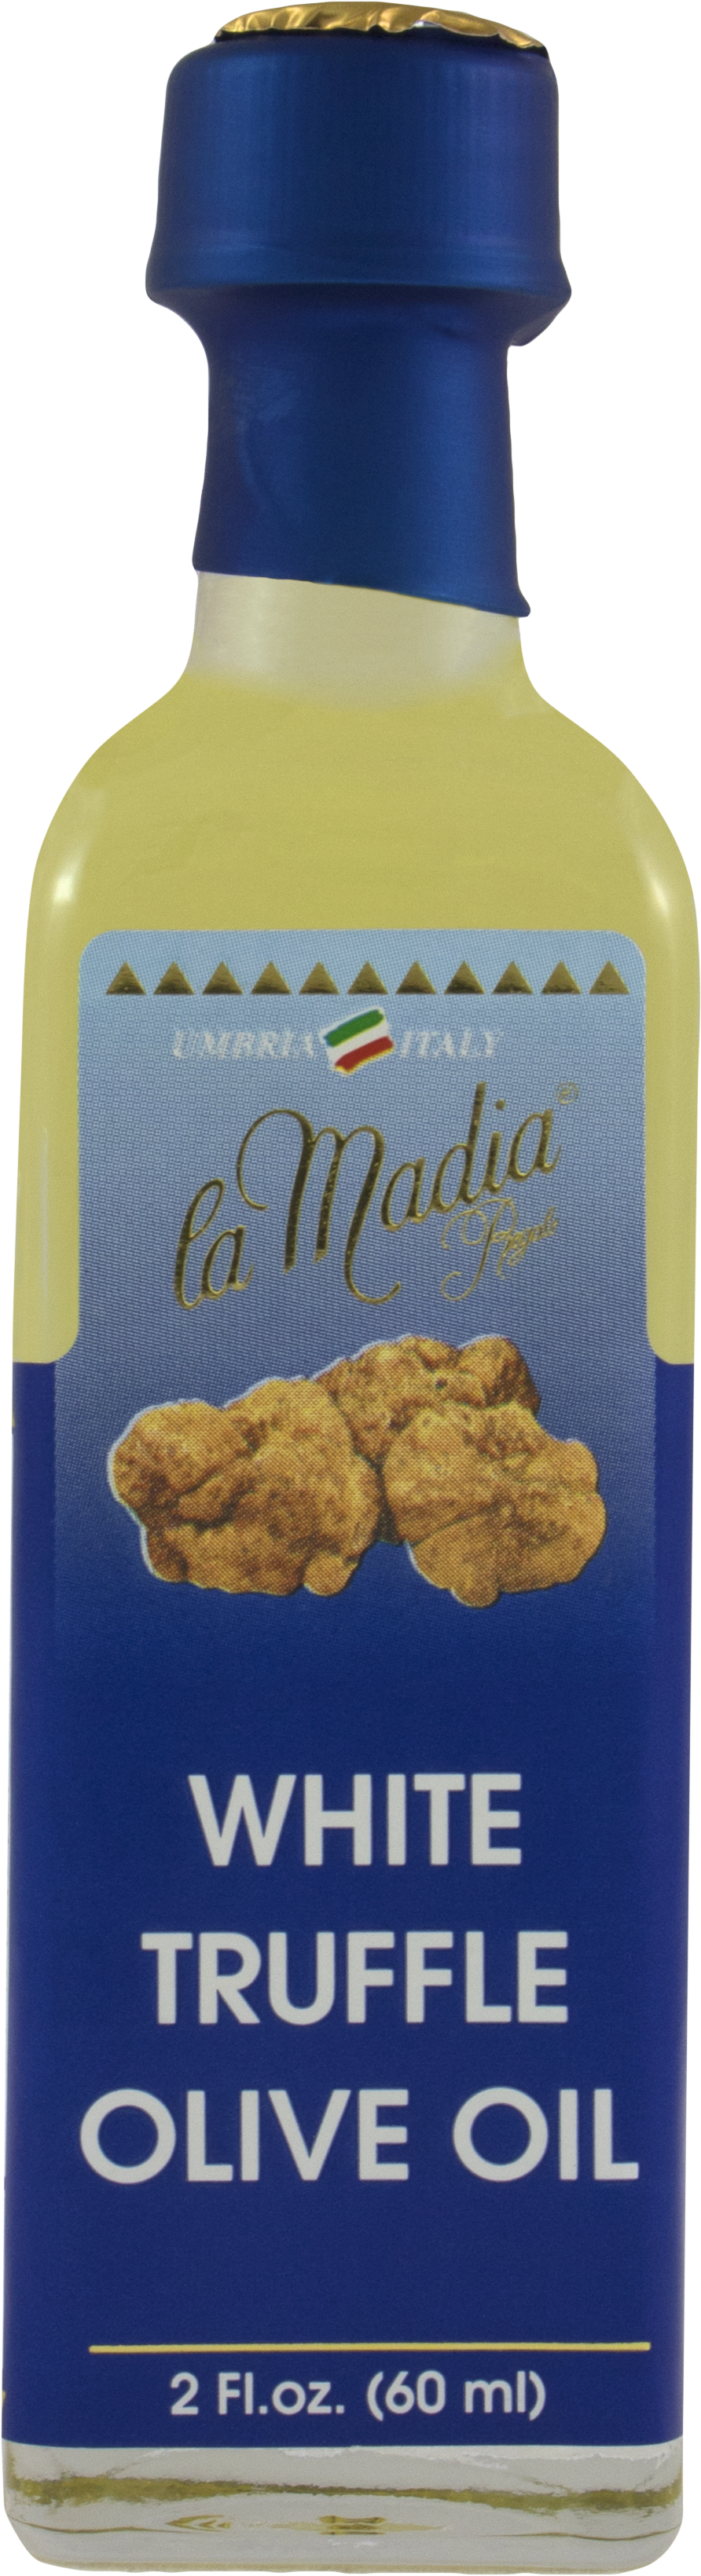 La Madia White Truffle Olive Oil - Advantage Gourmet Importers -bluecashew kitchen homestead